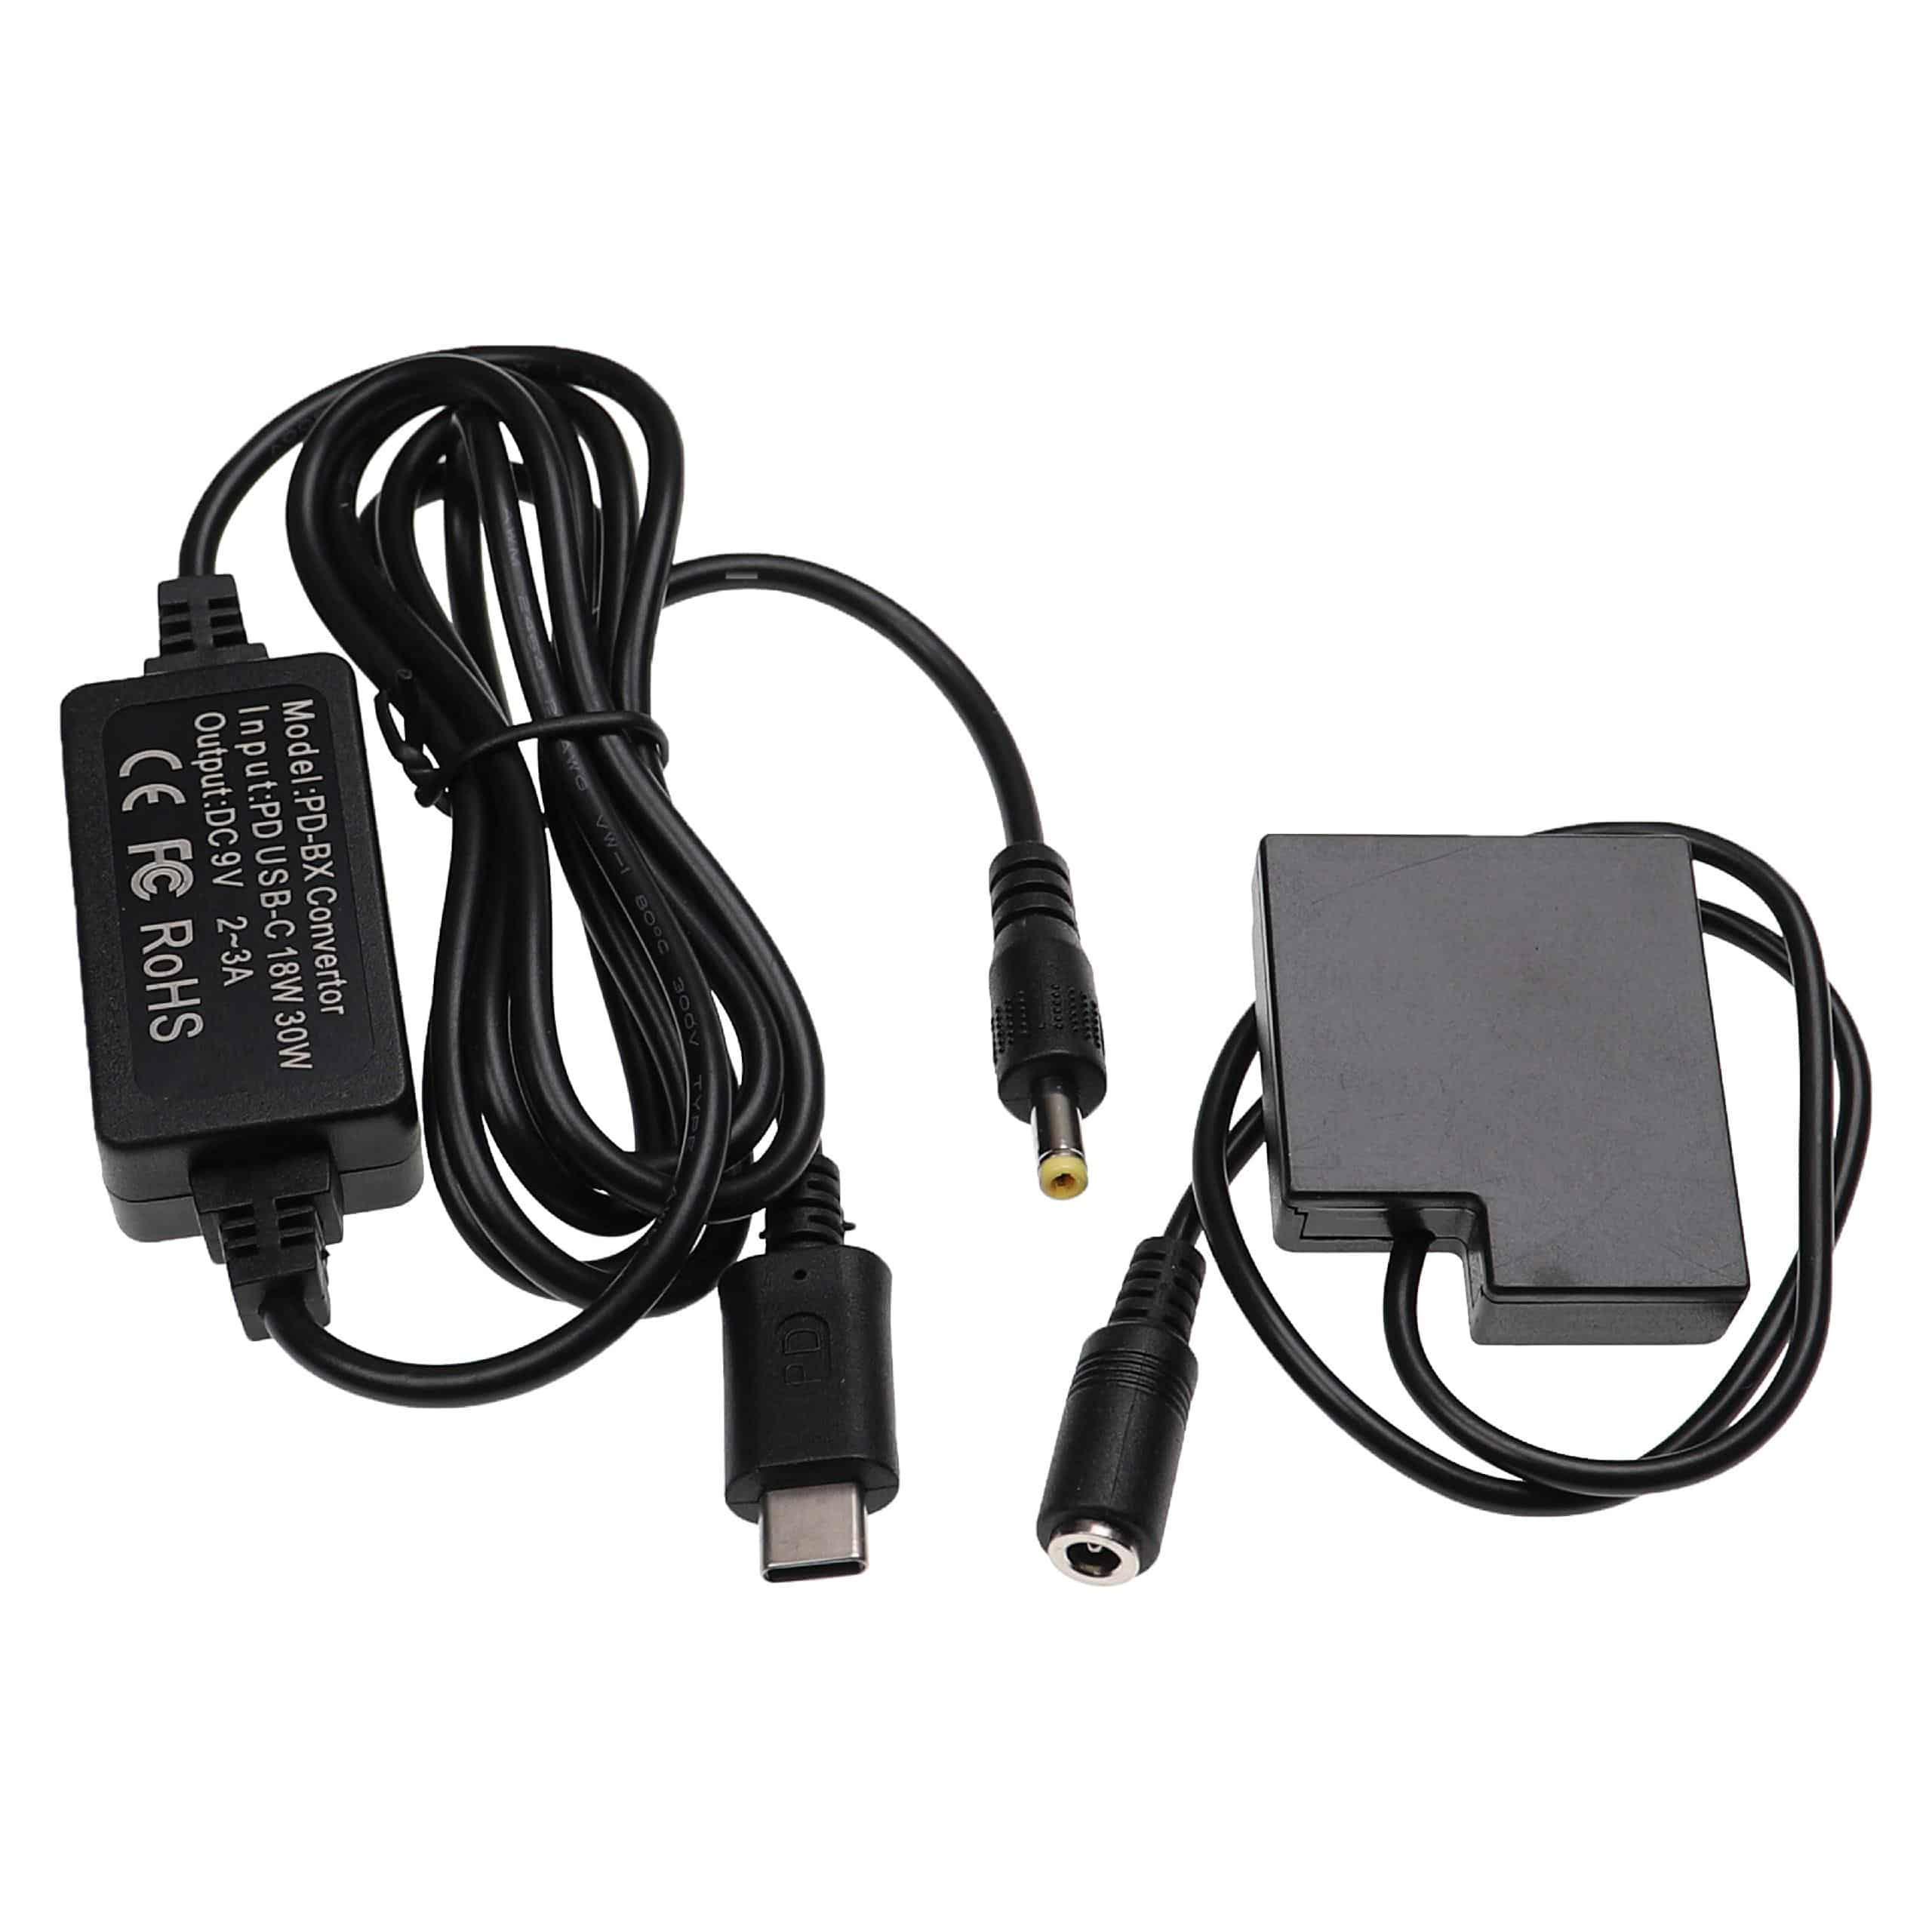 USB Power Supply replaces DMW-AC8 for Camera + DC Coupler as Panasonic DMW-DCC15 - 2 m, 9 V 3.0 A